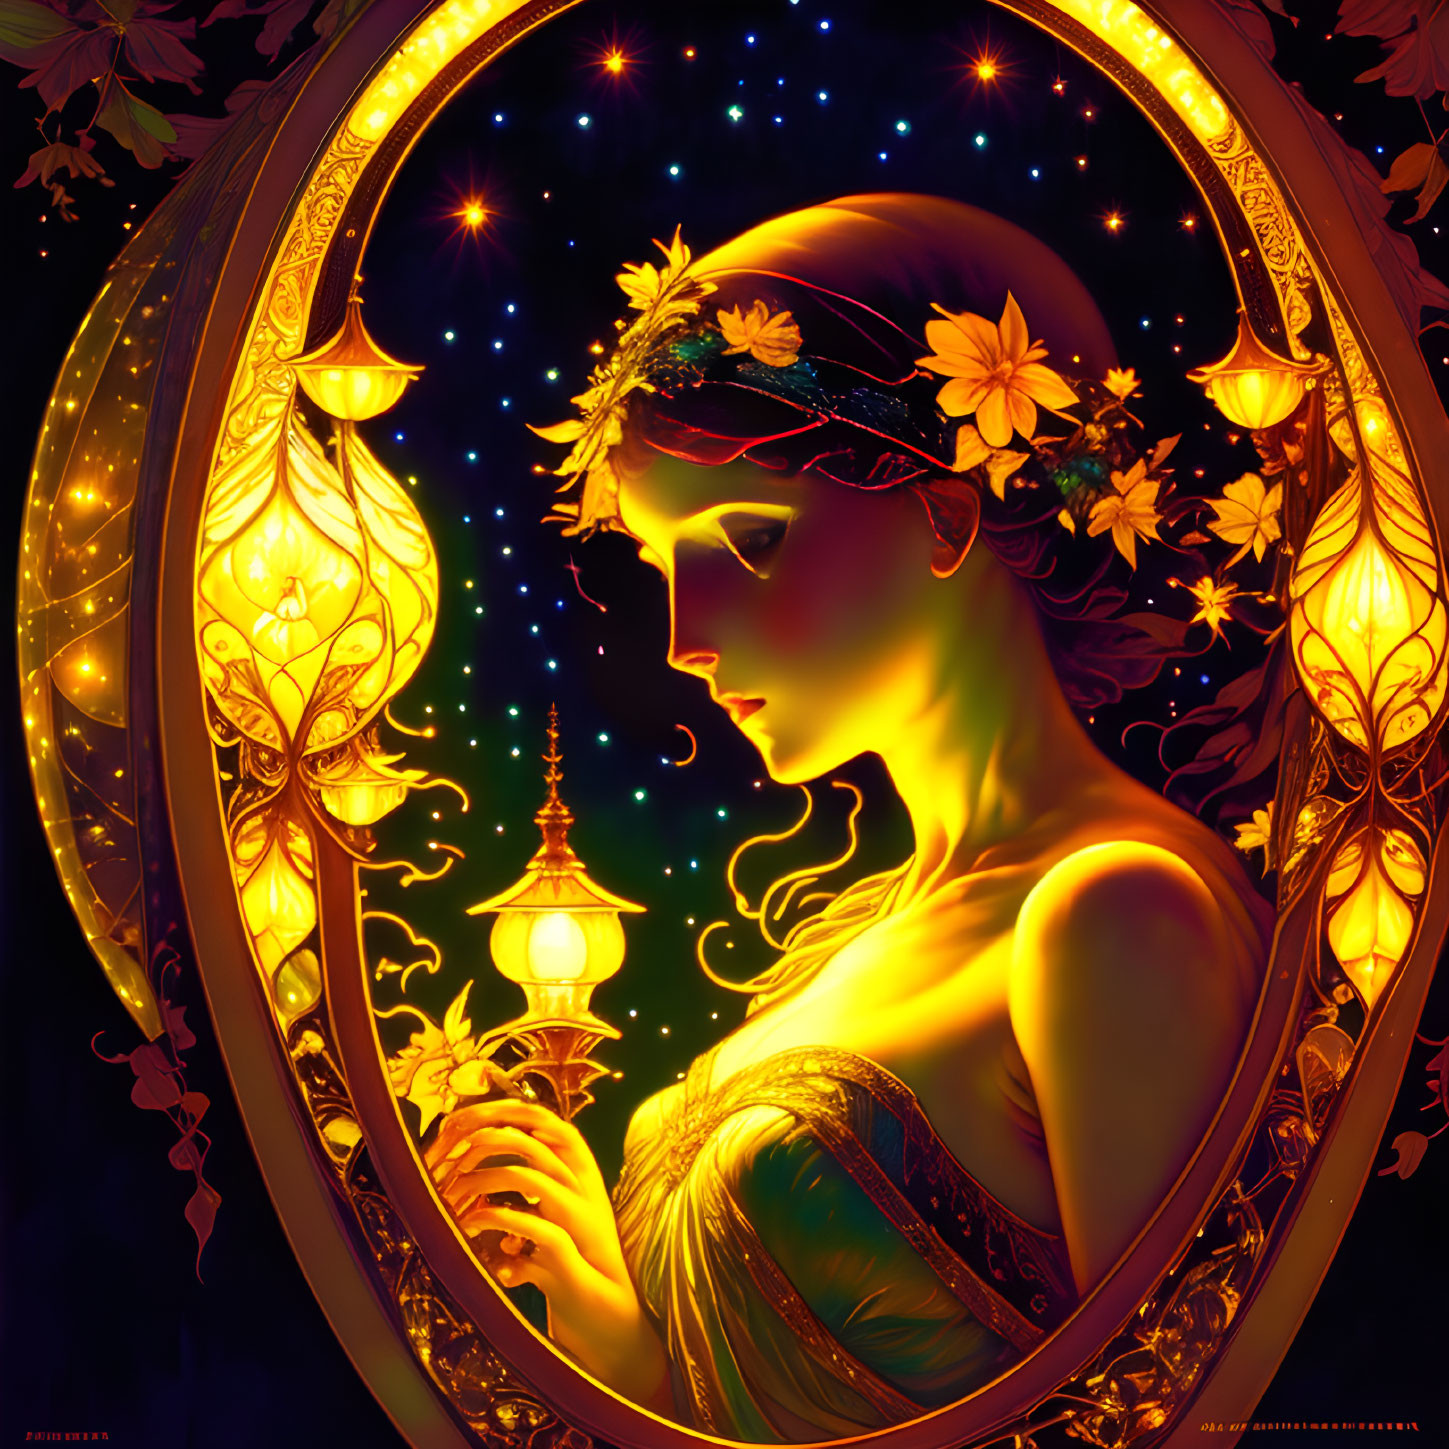 Illustration of woman with glowing skin, flowers, lantern, ornate circular border, night sky.